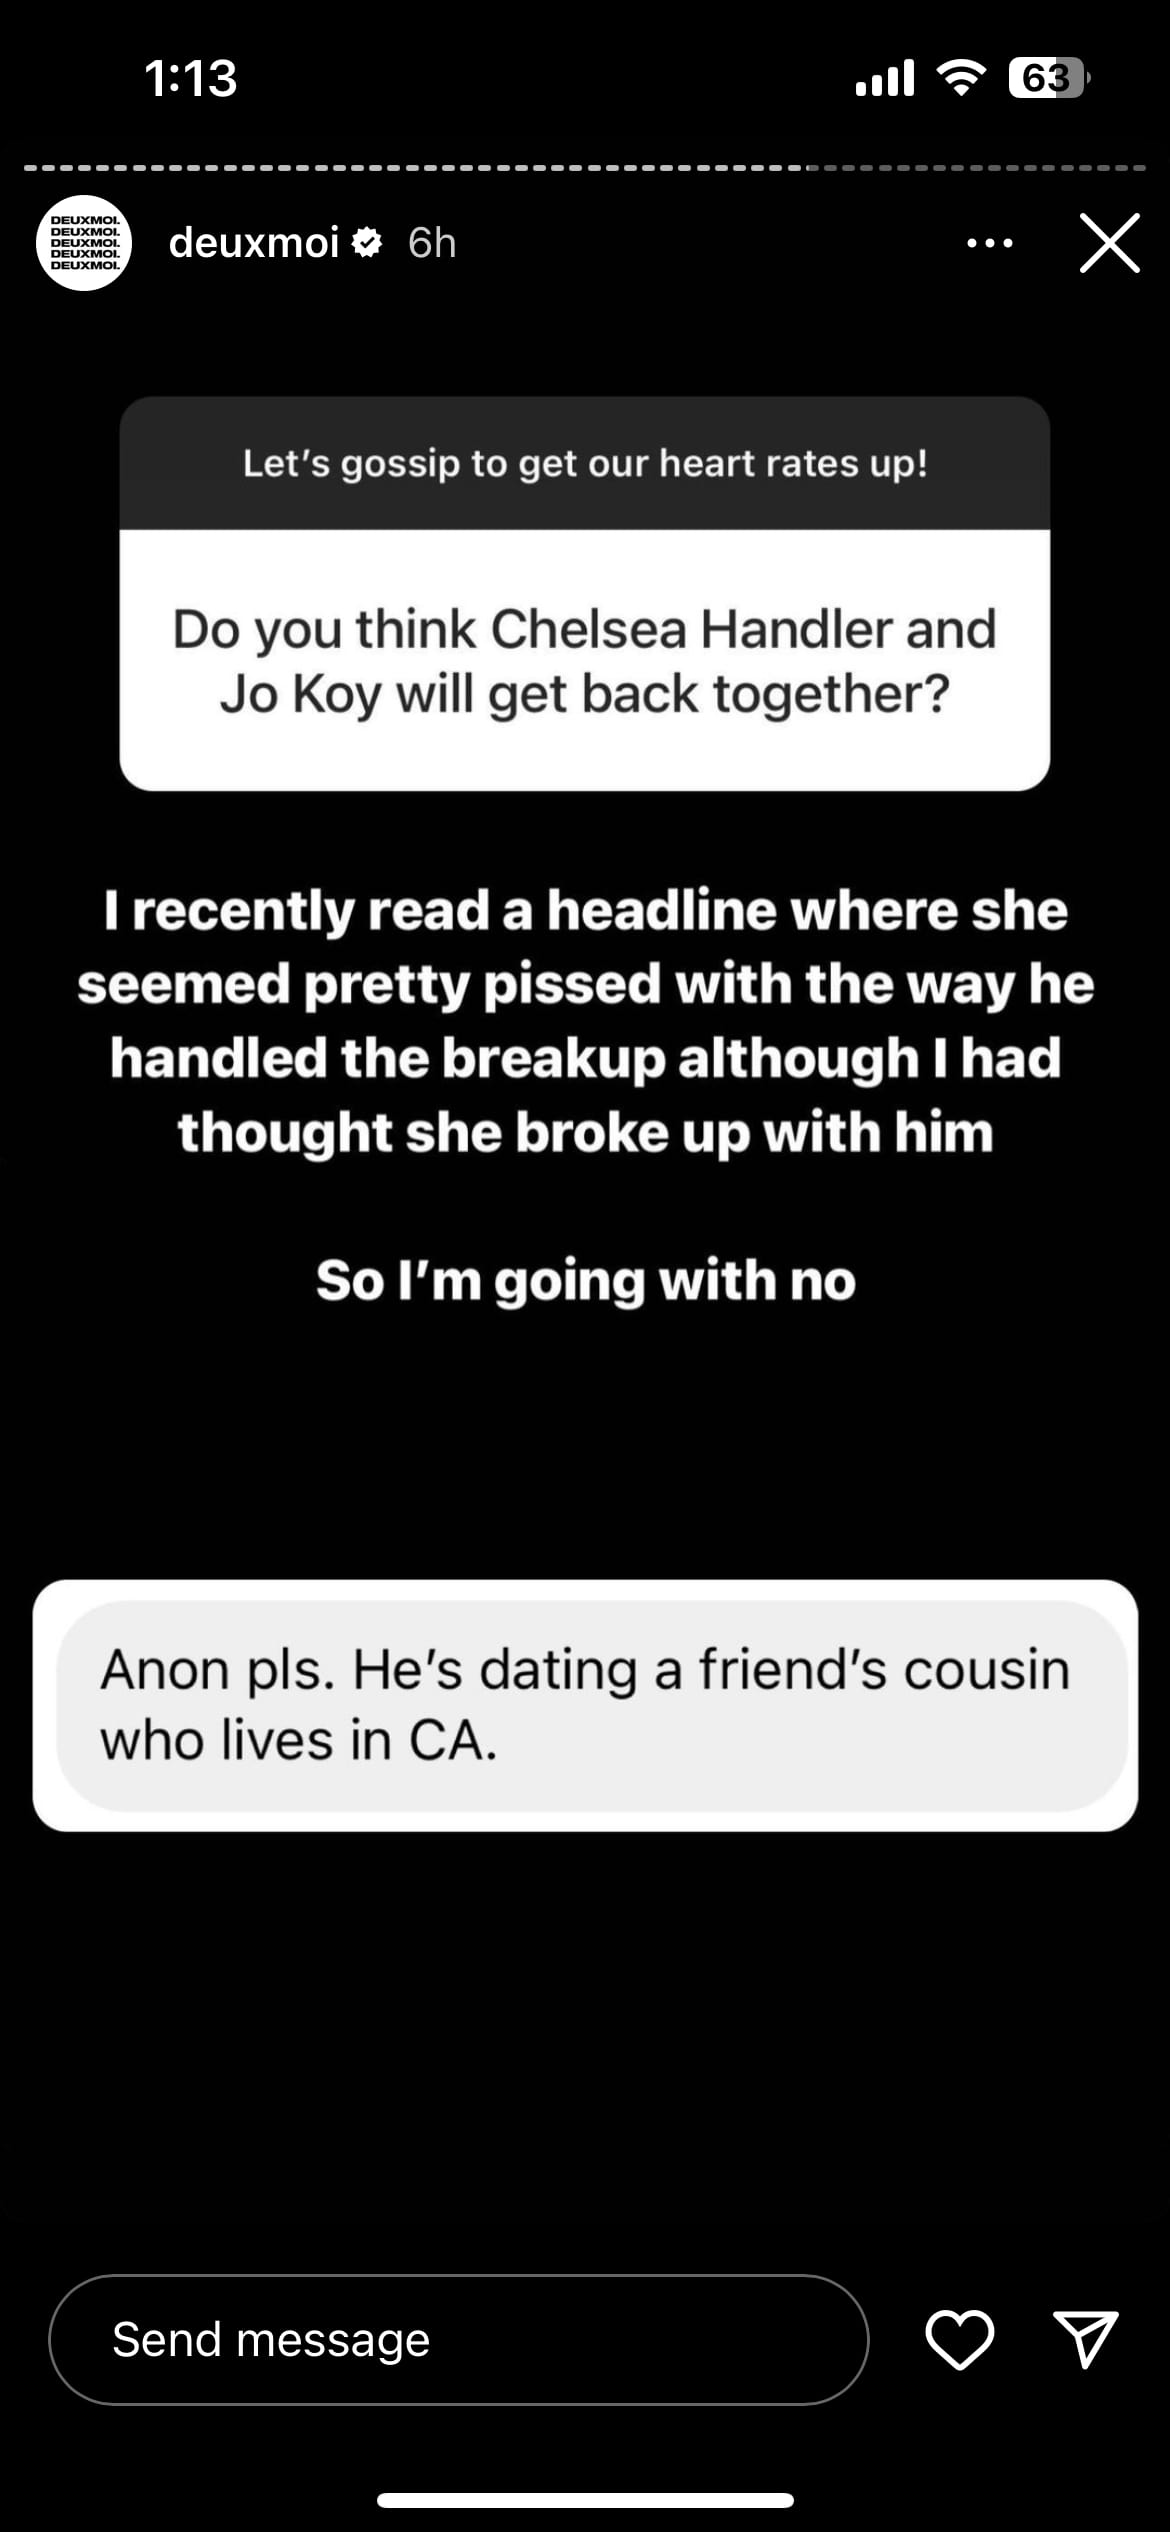 Deuxmoi's report claiming Jo Koy has a new girlfriend